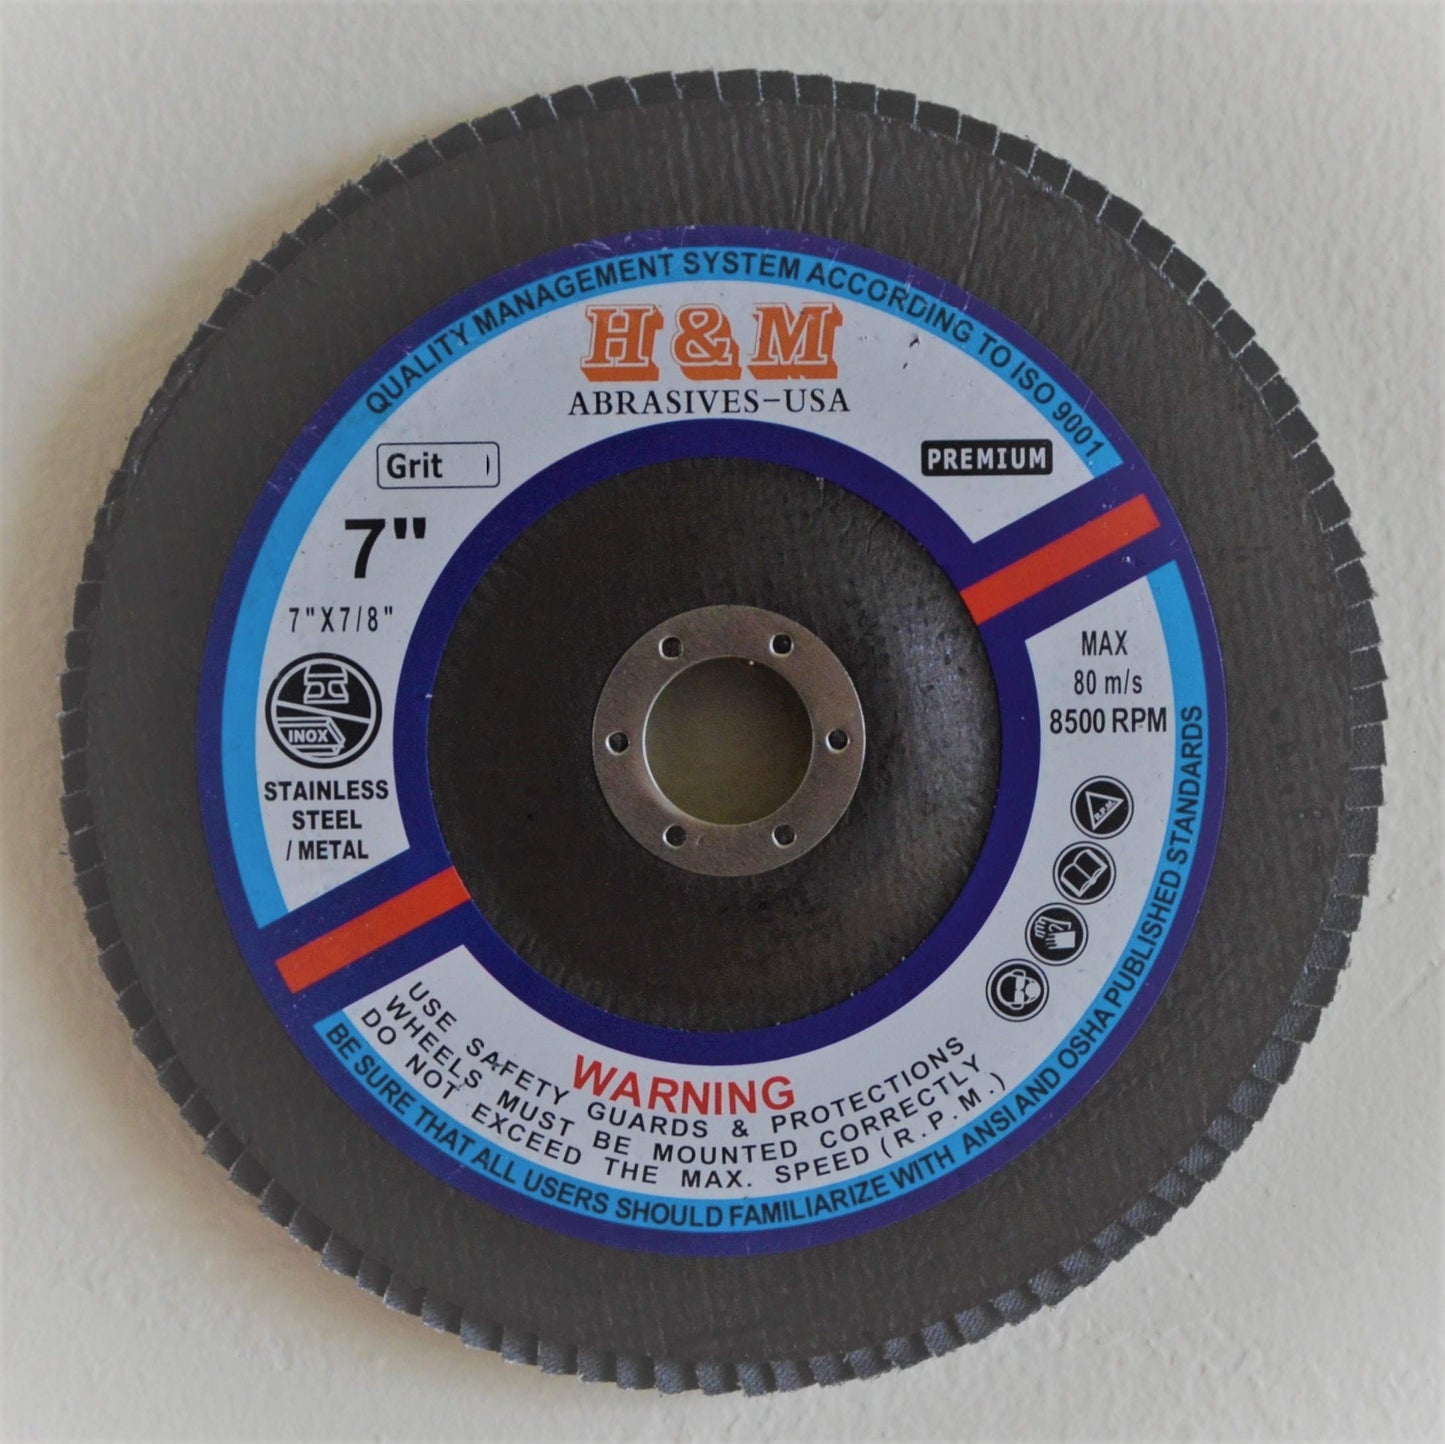 Premium FLAP DISCS 7" x 7/8" Zirconia 120 grit Grinding Wheel grinder tool - 5pcs Pack